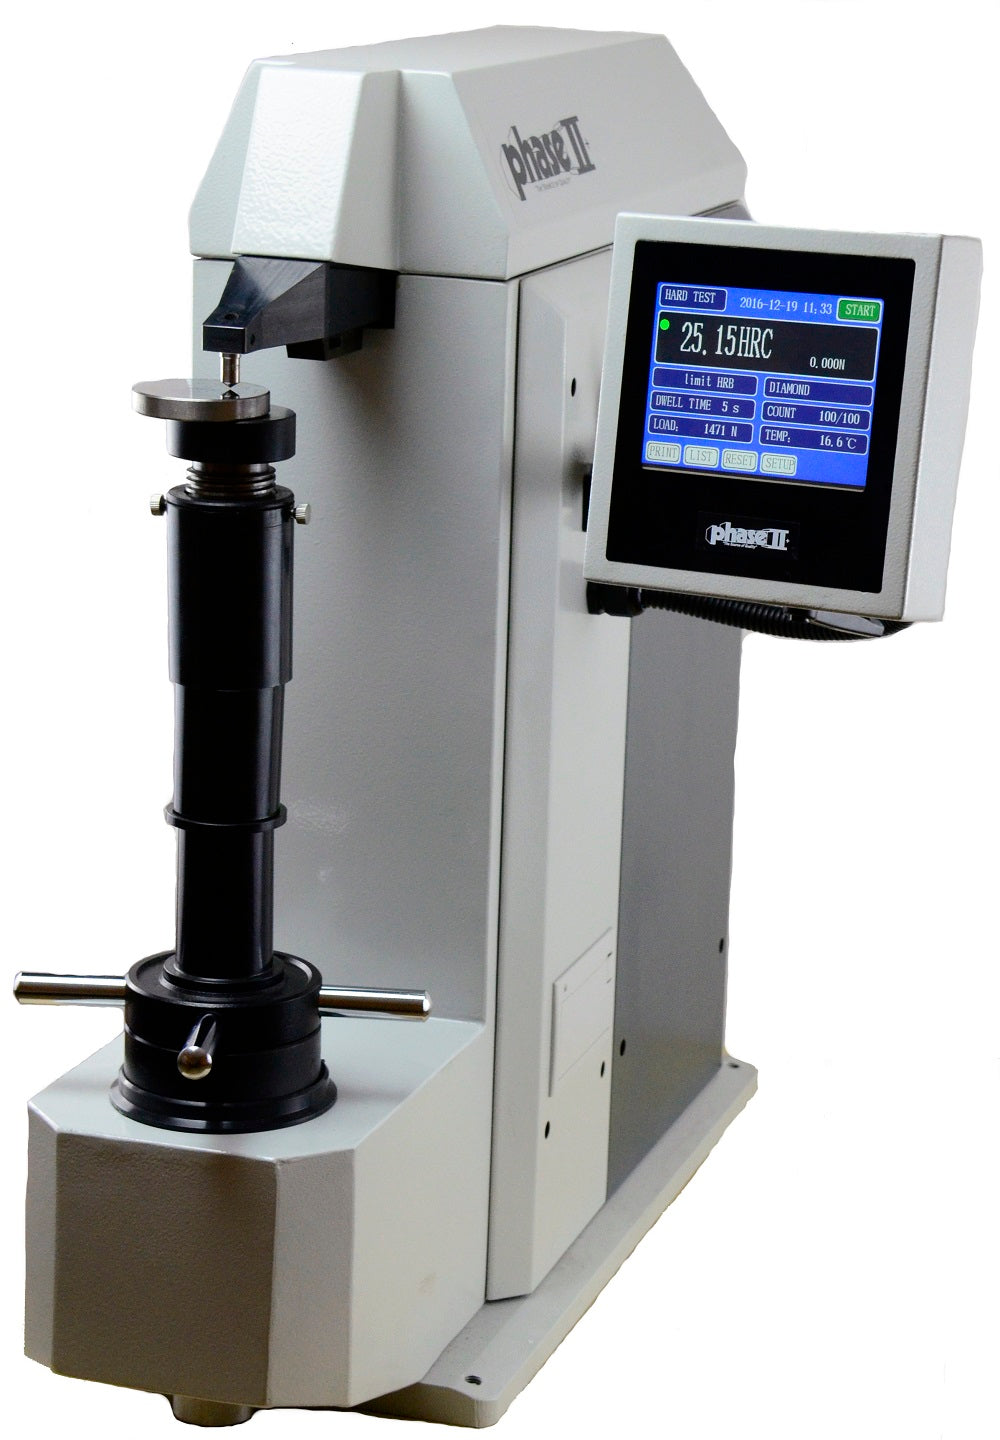 Digital Superficial Rockwell Hardness Tester Phase II - Model 900-346